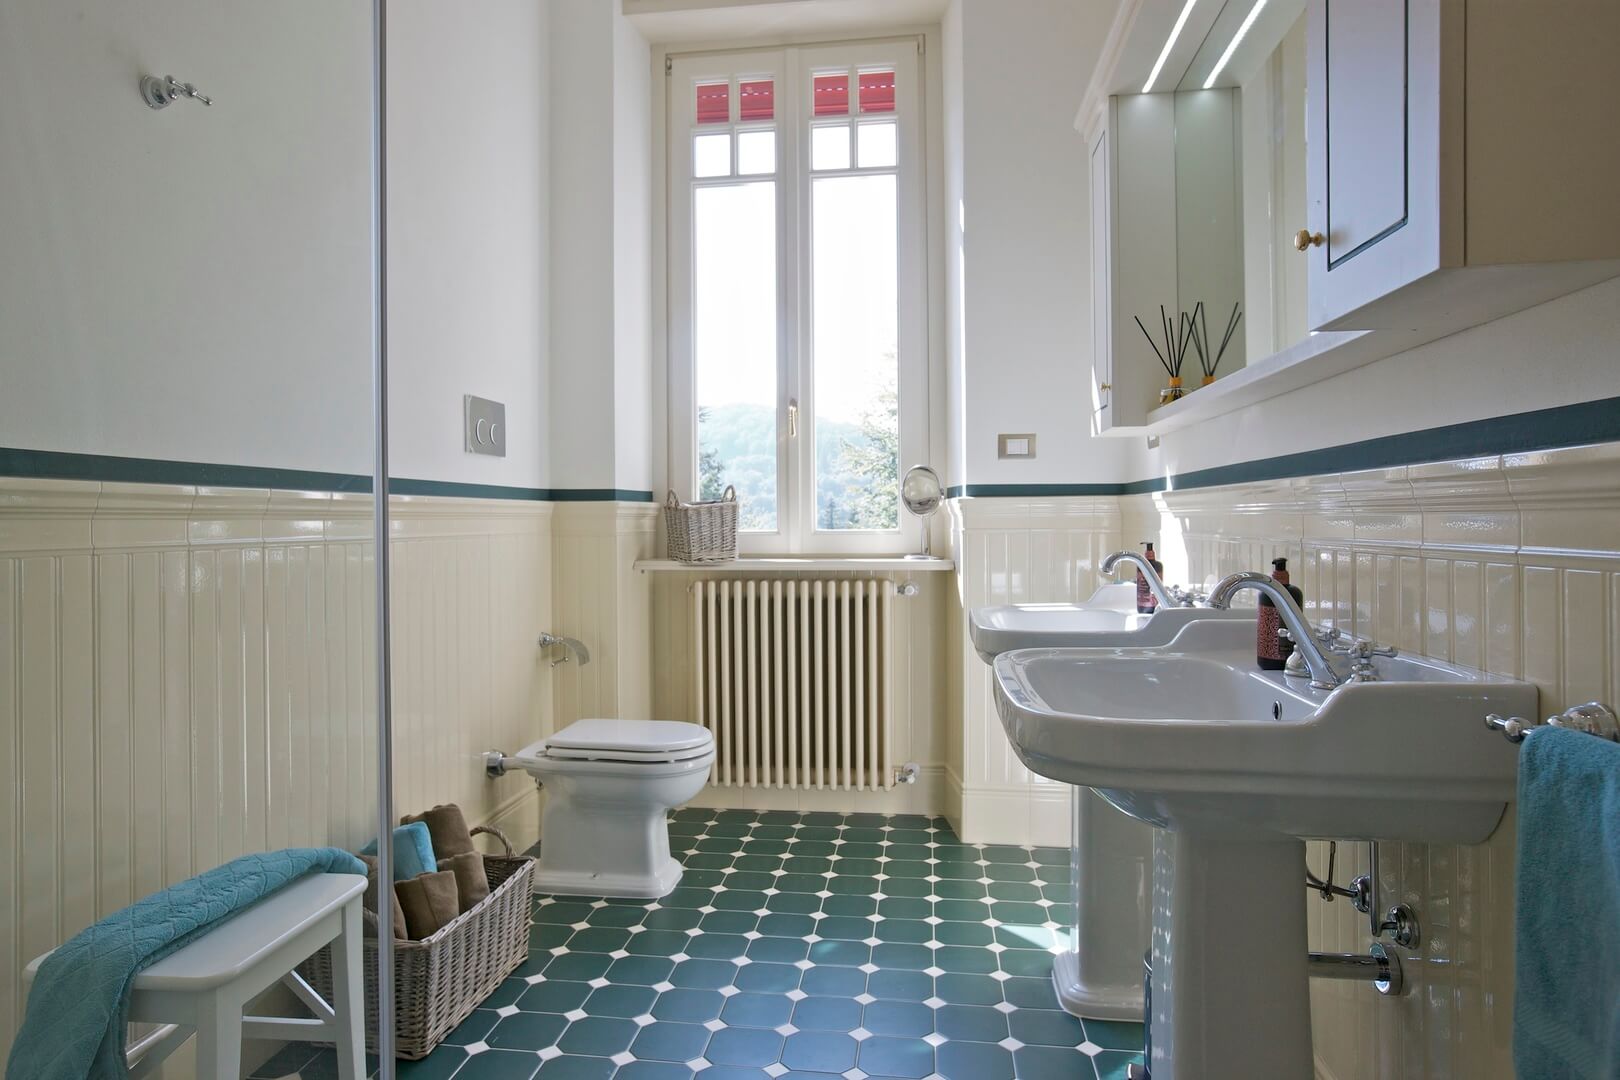 Restroom images at Villa Confalonieri